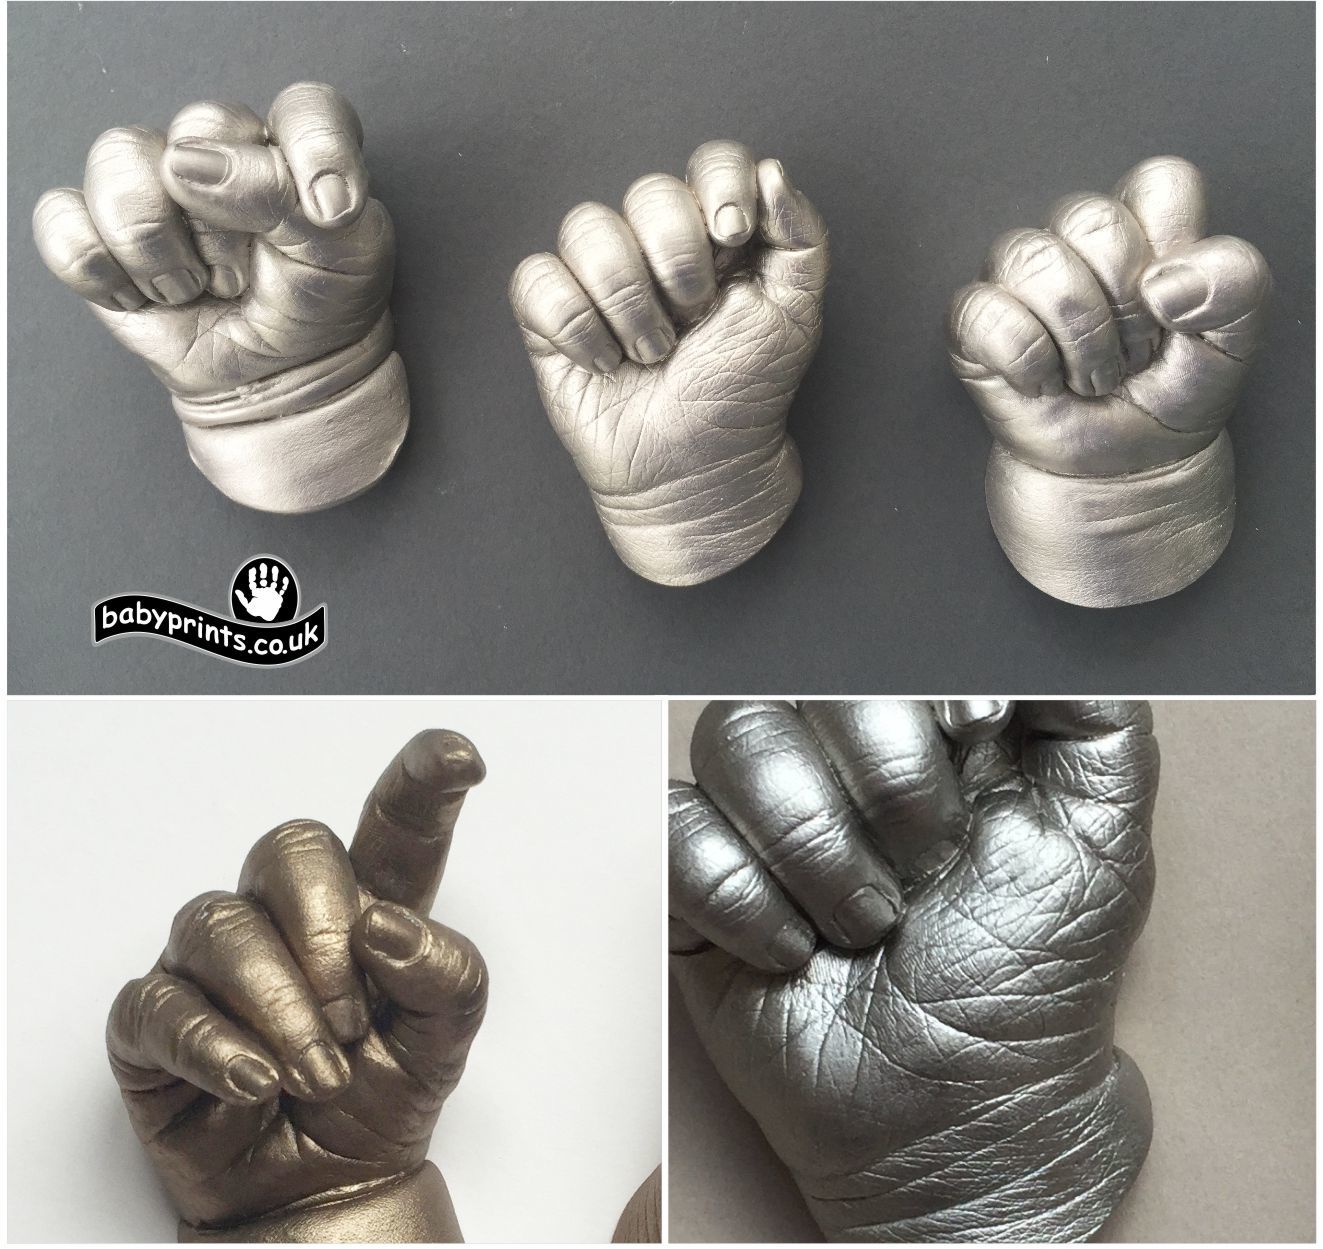 Baby hand casting